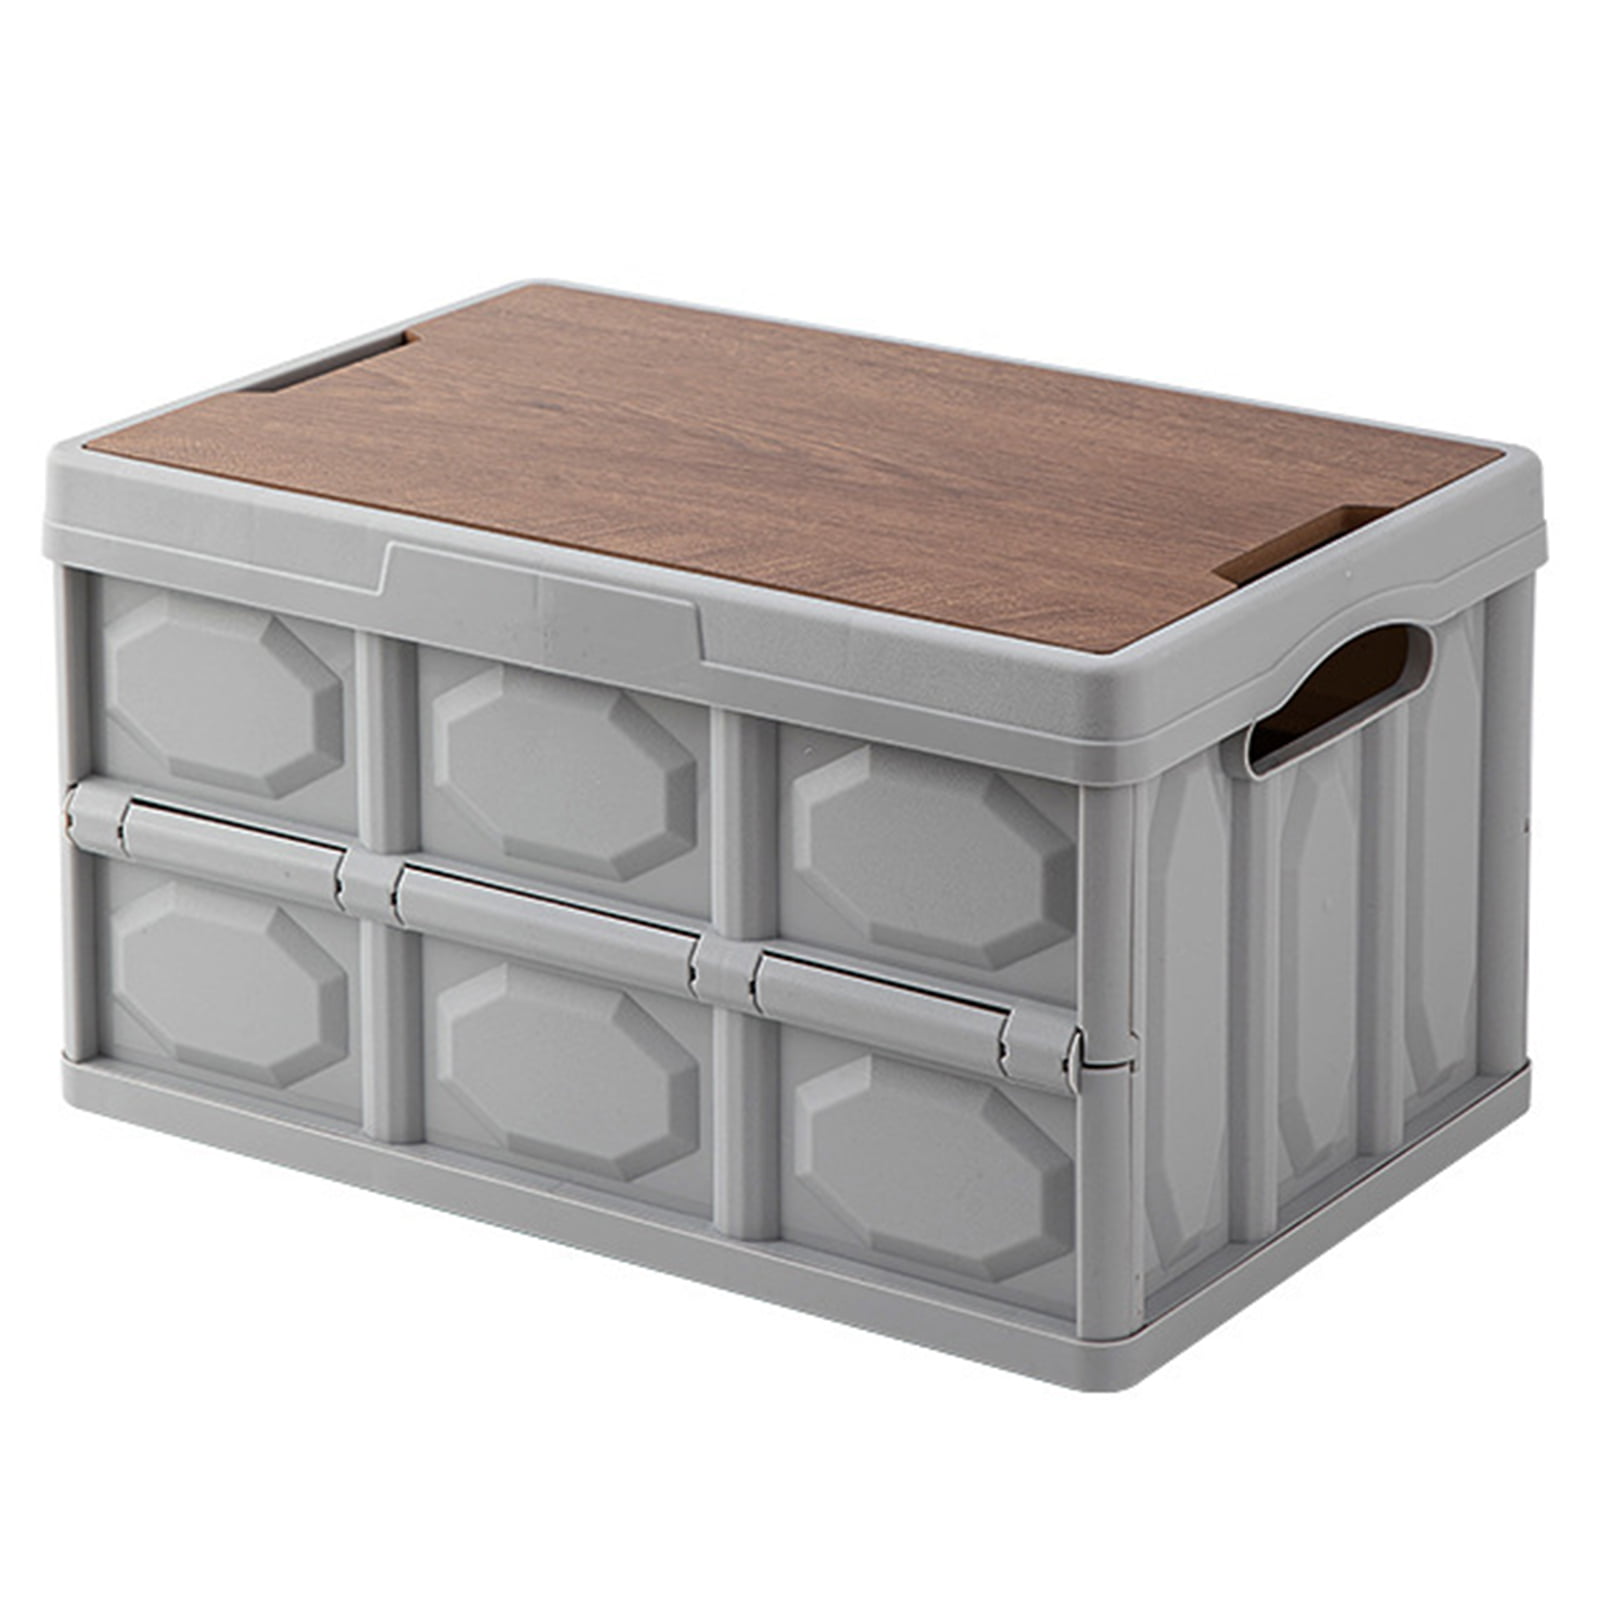 Waroomhouse Refrigerator Storage Box Compartment Design Flexible